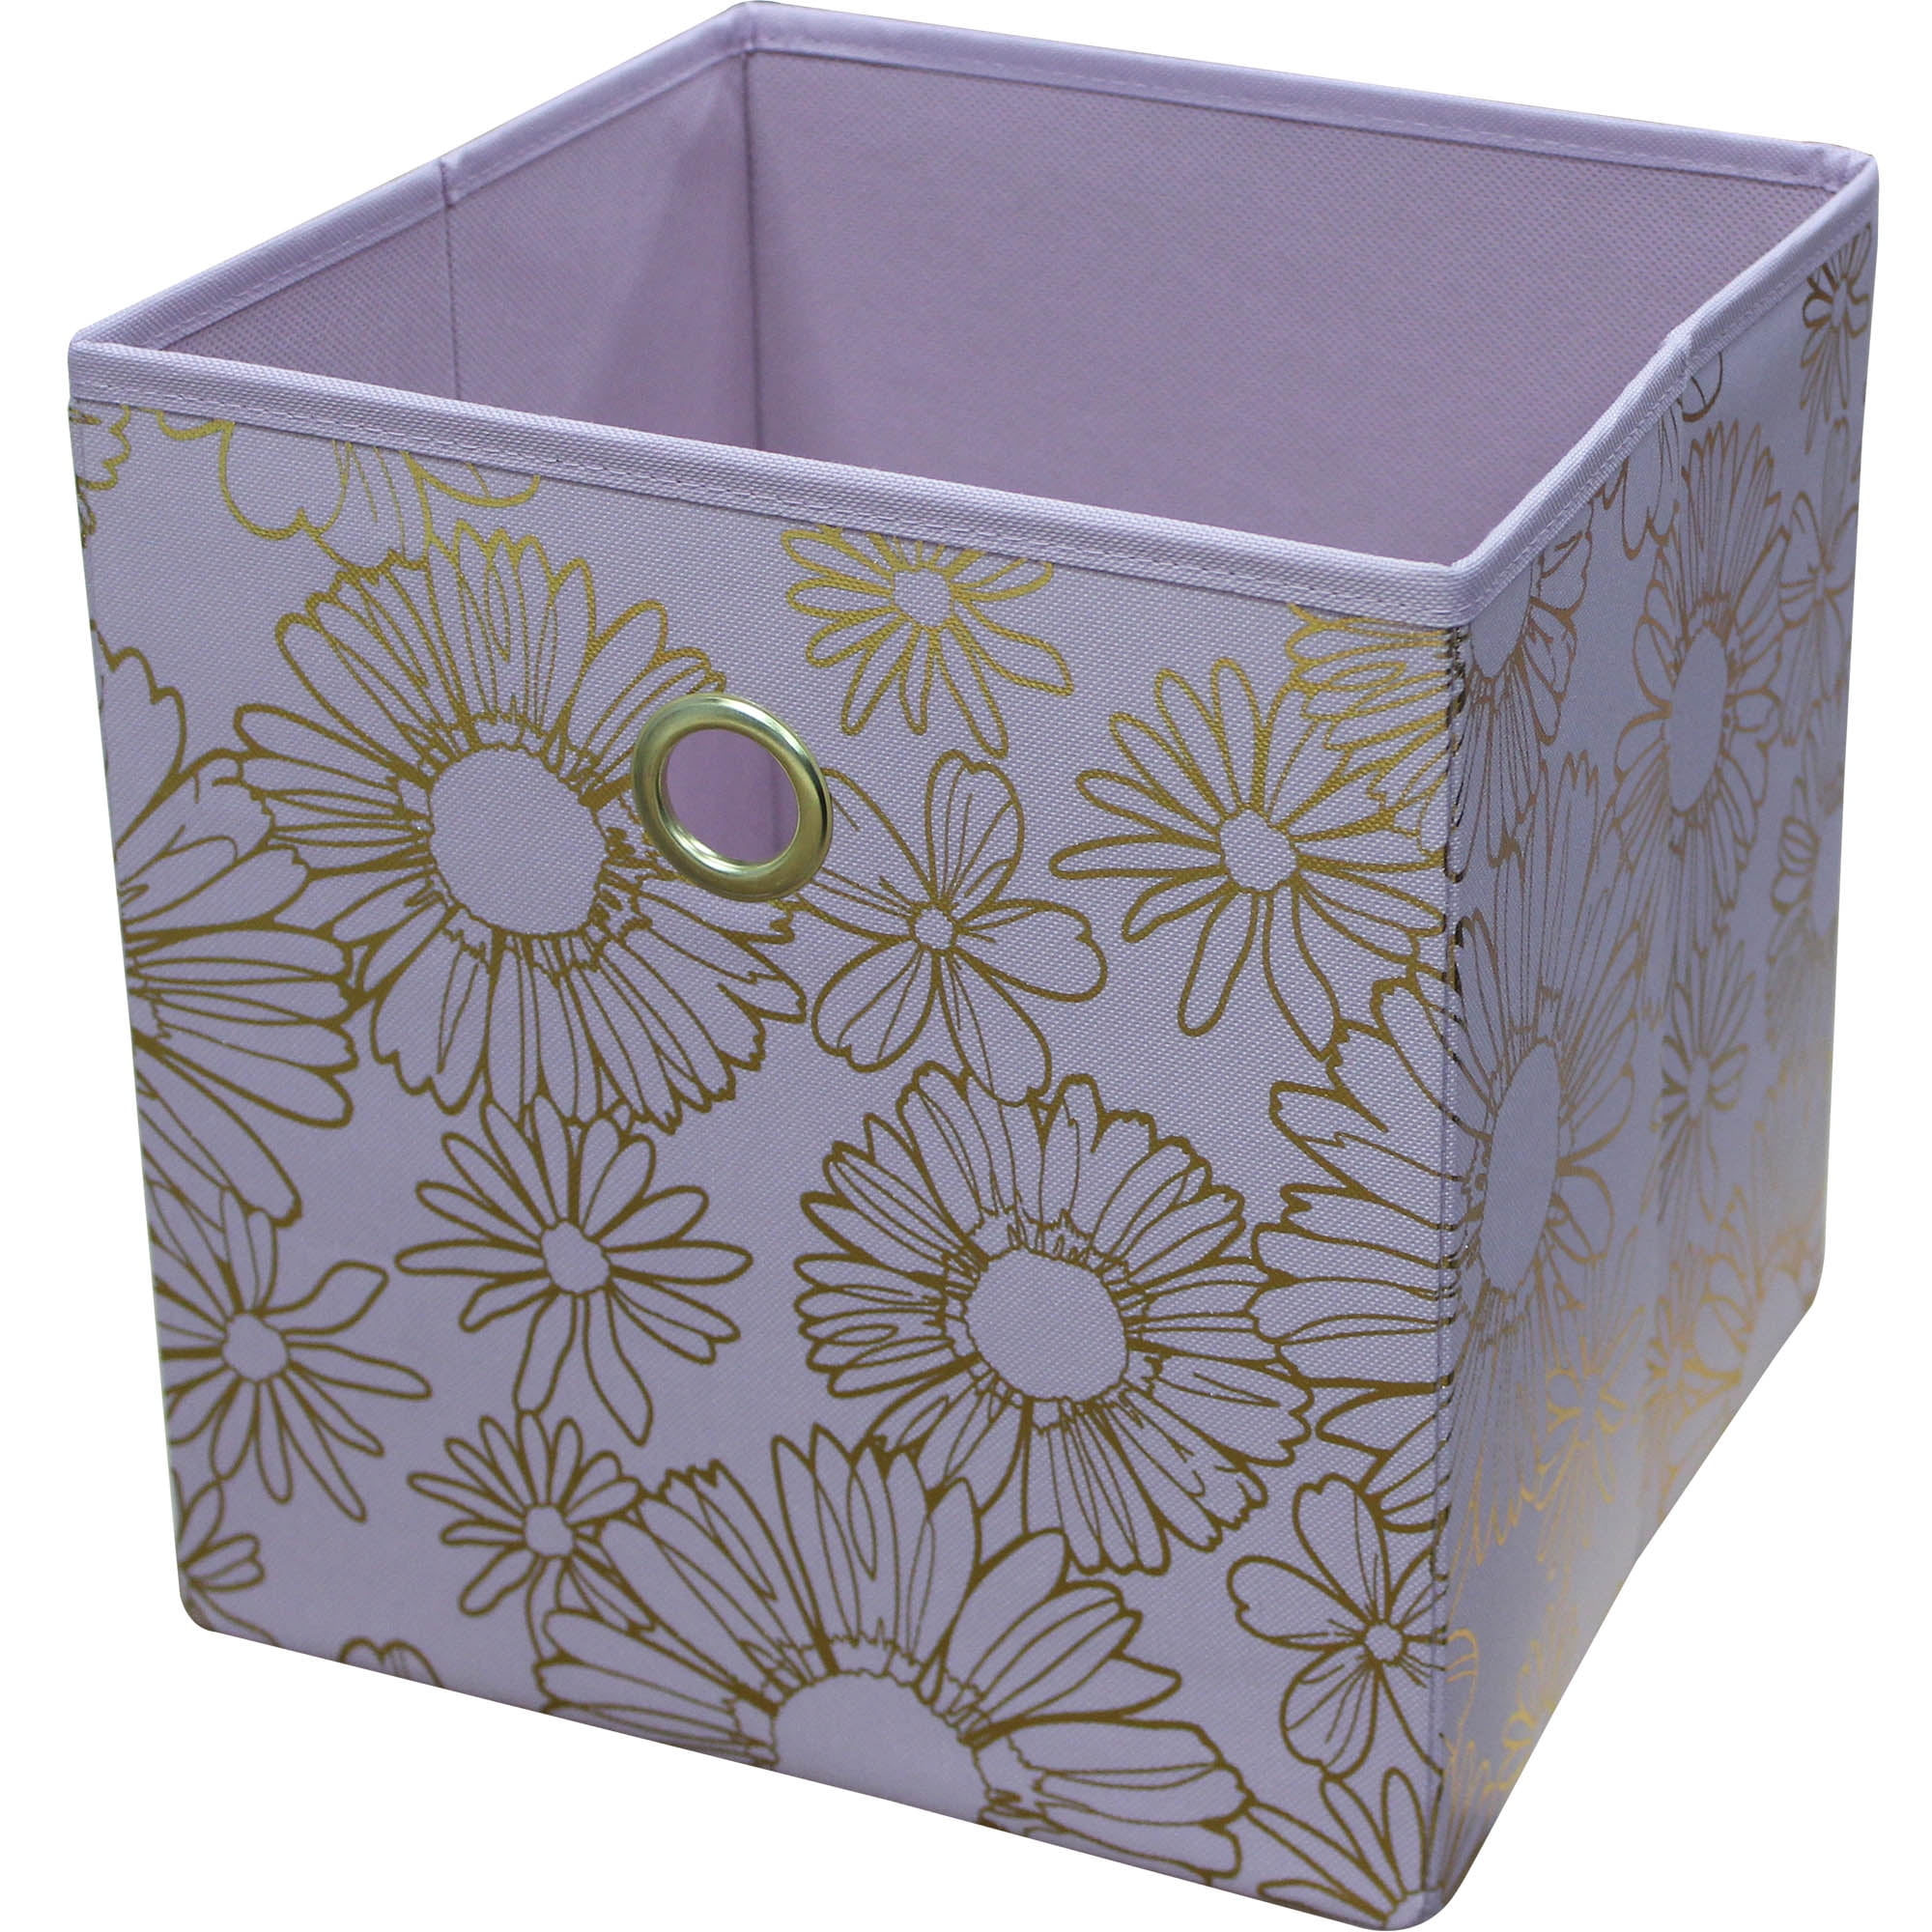 STORAGE MANIAC 6-Pack Foldable Storage Cubes Basket Bins with Side Pockets Full Coroplast Storage Organizer Drawers Black Flower STM1306000097 Polyester Canvas